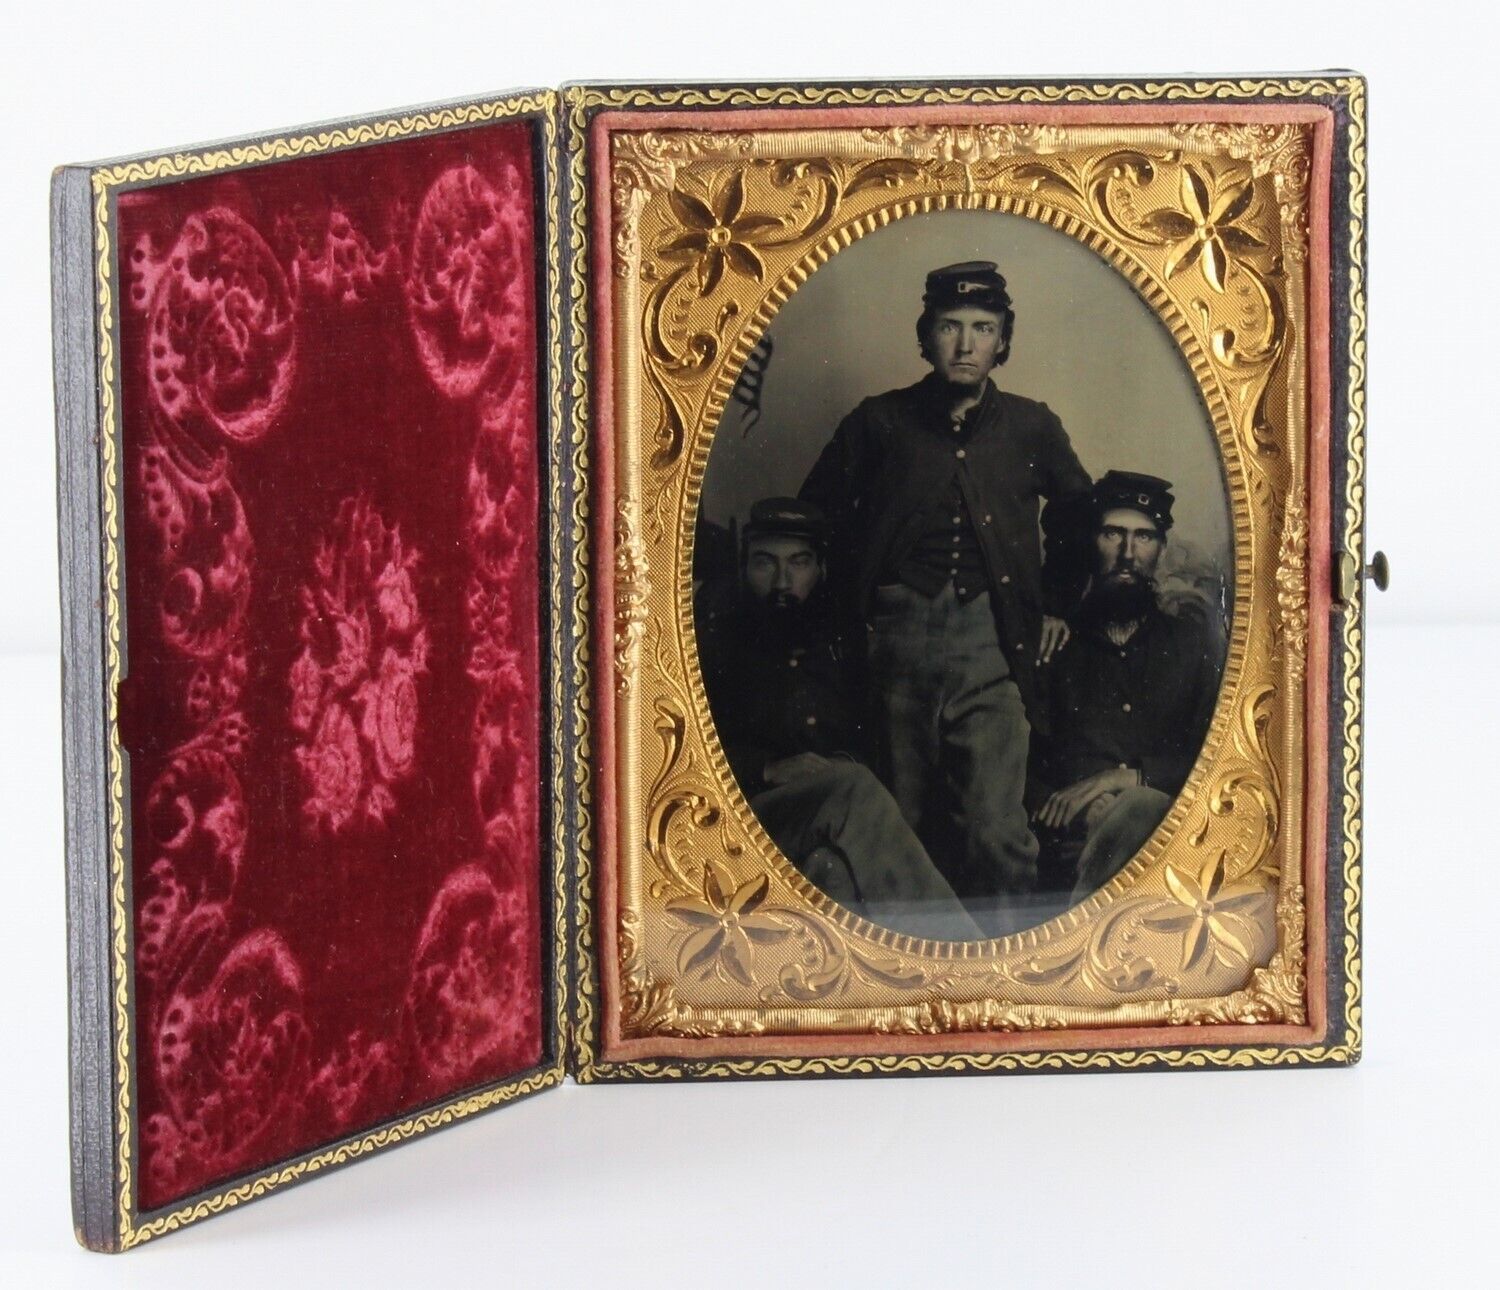 Three Union Soldiers 1860 Civil War Military Patriotic Flag Tintype Tintype